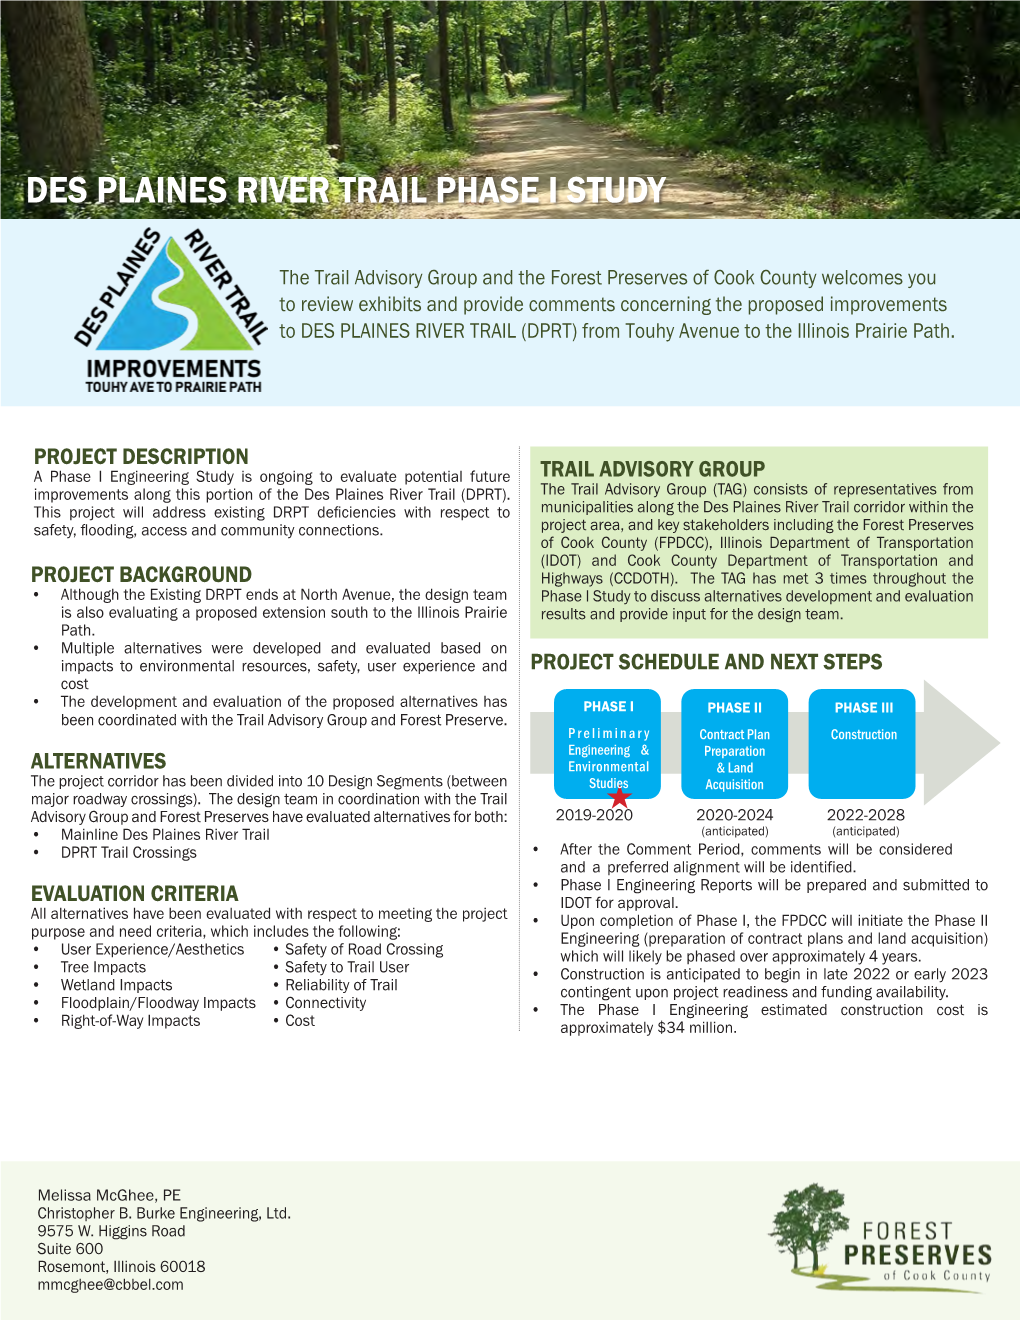 Des Plaines River Trail Phase I Study Overview